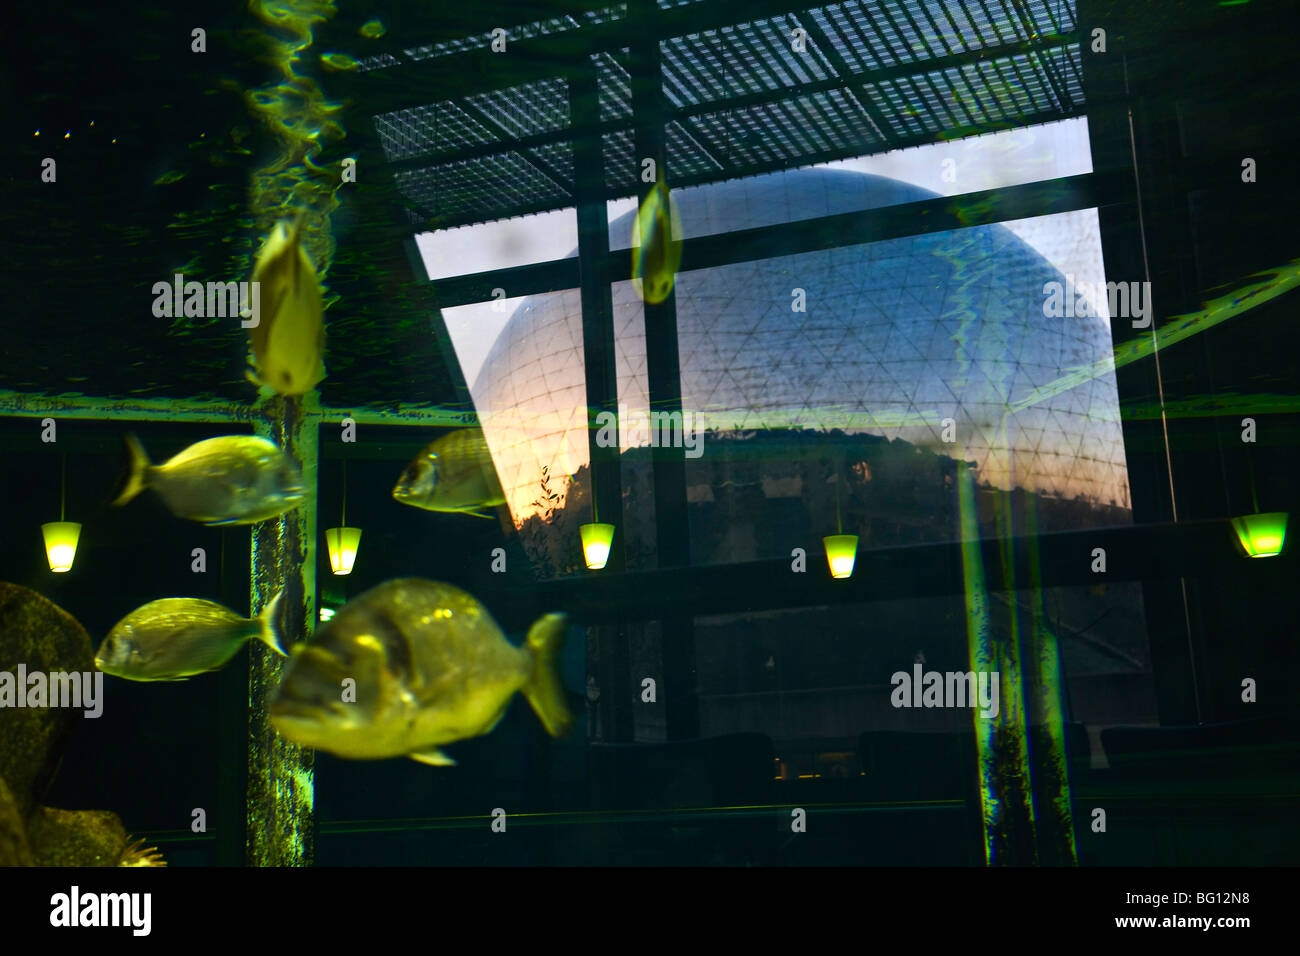 Aquarium de paris hi-res stock photography and images - Alamy